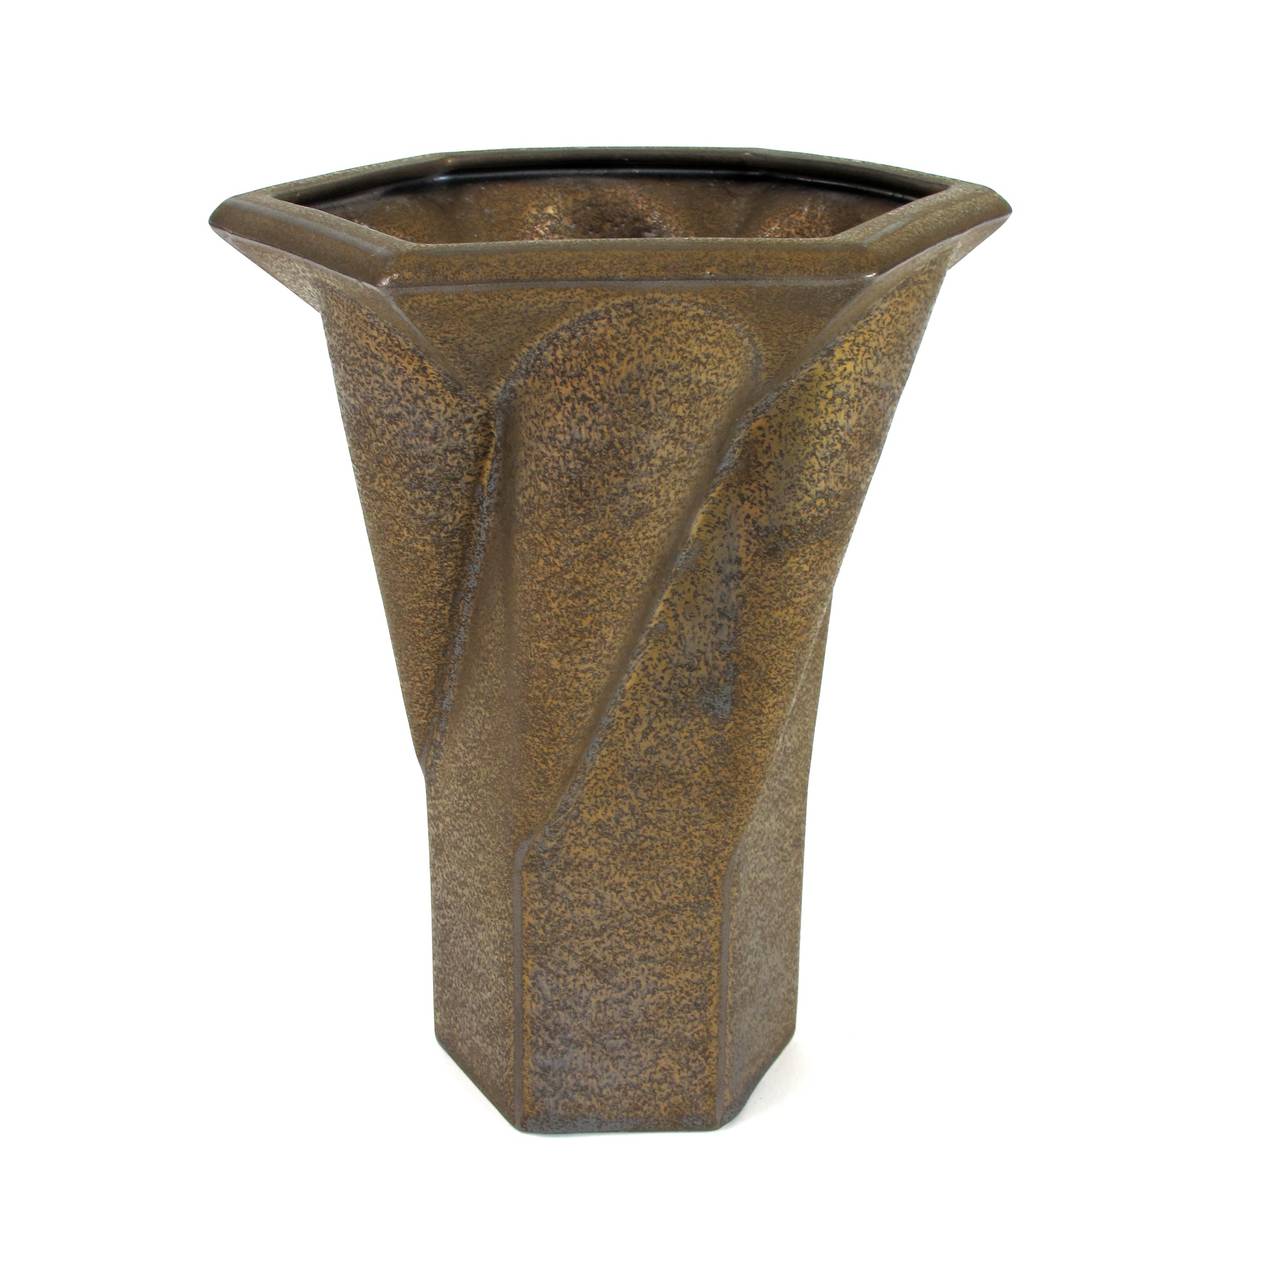 A bronze glazed stoneware vase with geometric shapes by Jan van der Vaart. This piece of Dutch avant-garde pottery was executed in 1997 in his own studio. The vase is signed on the bottom '97 VD VAART' (see last photo).

Jan van der Vaart (1931 -